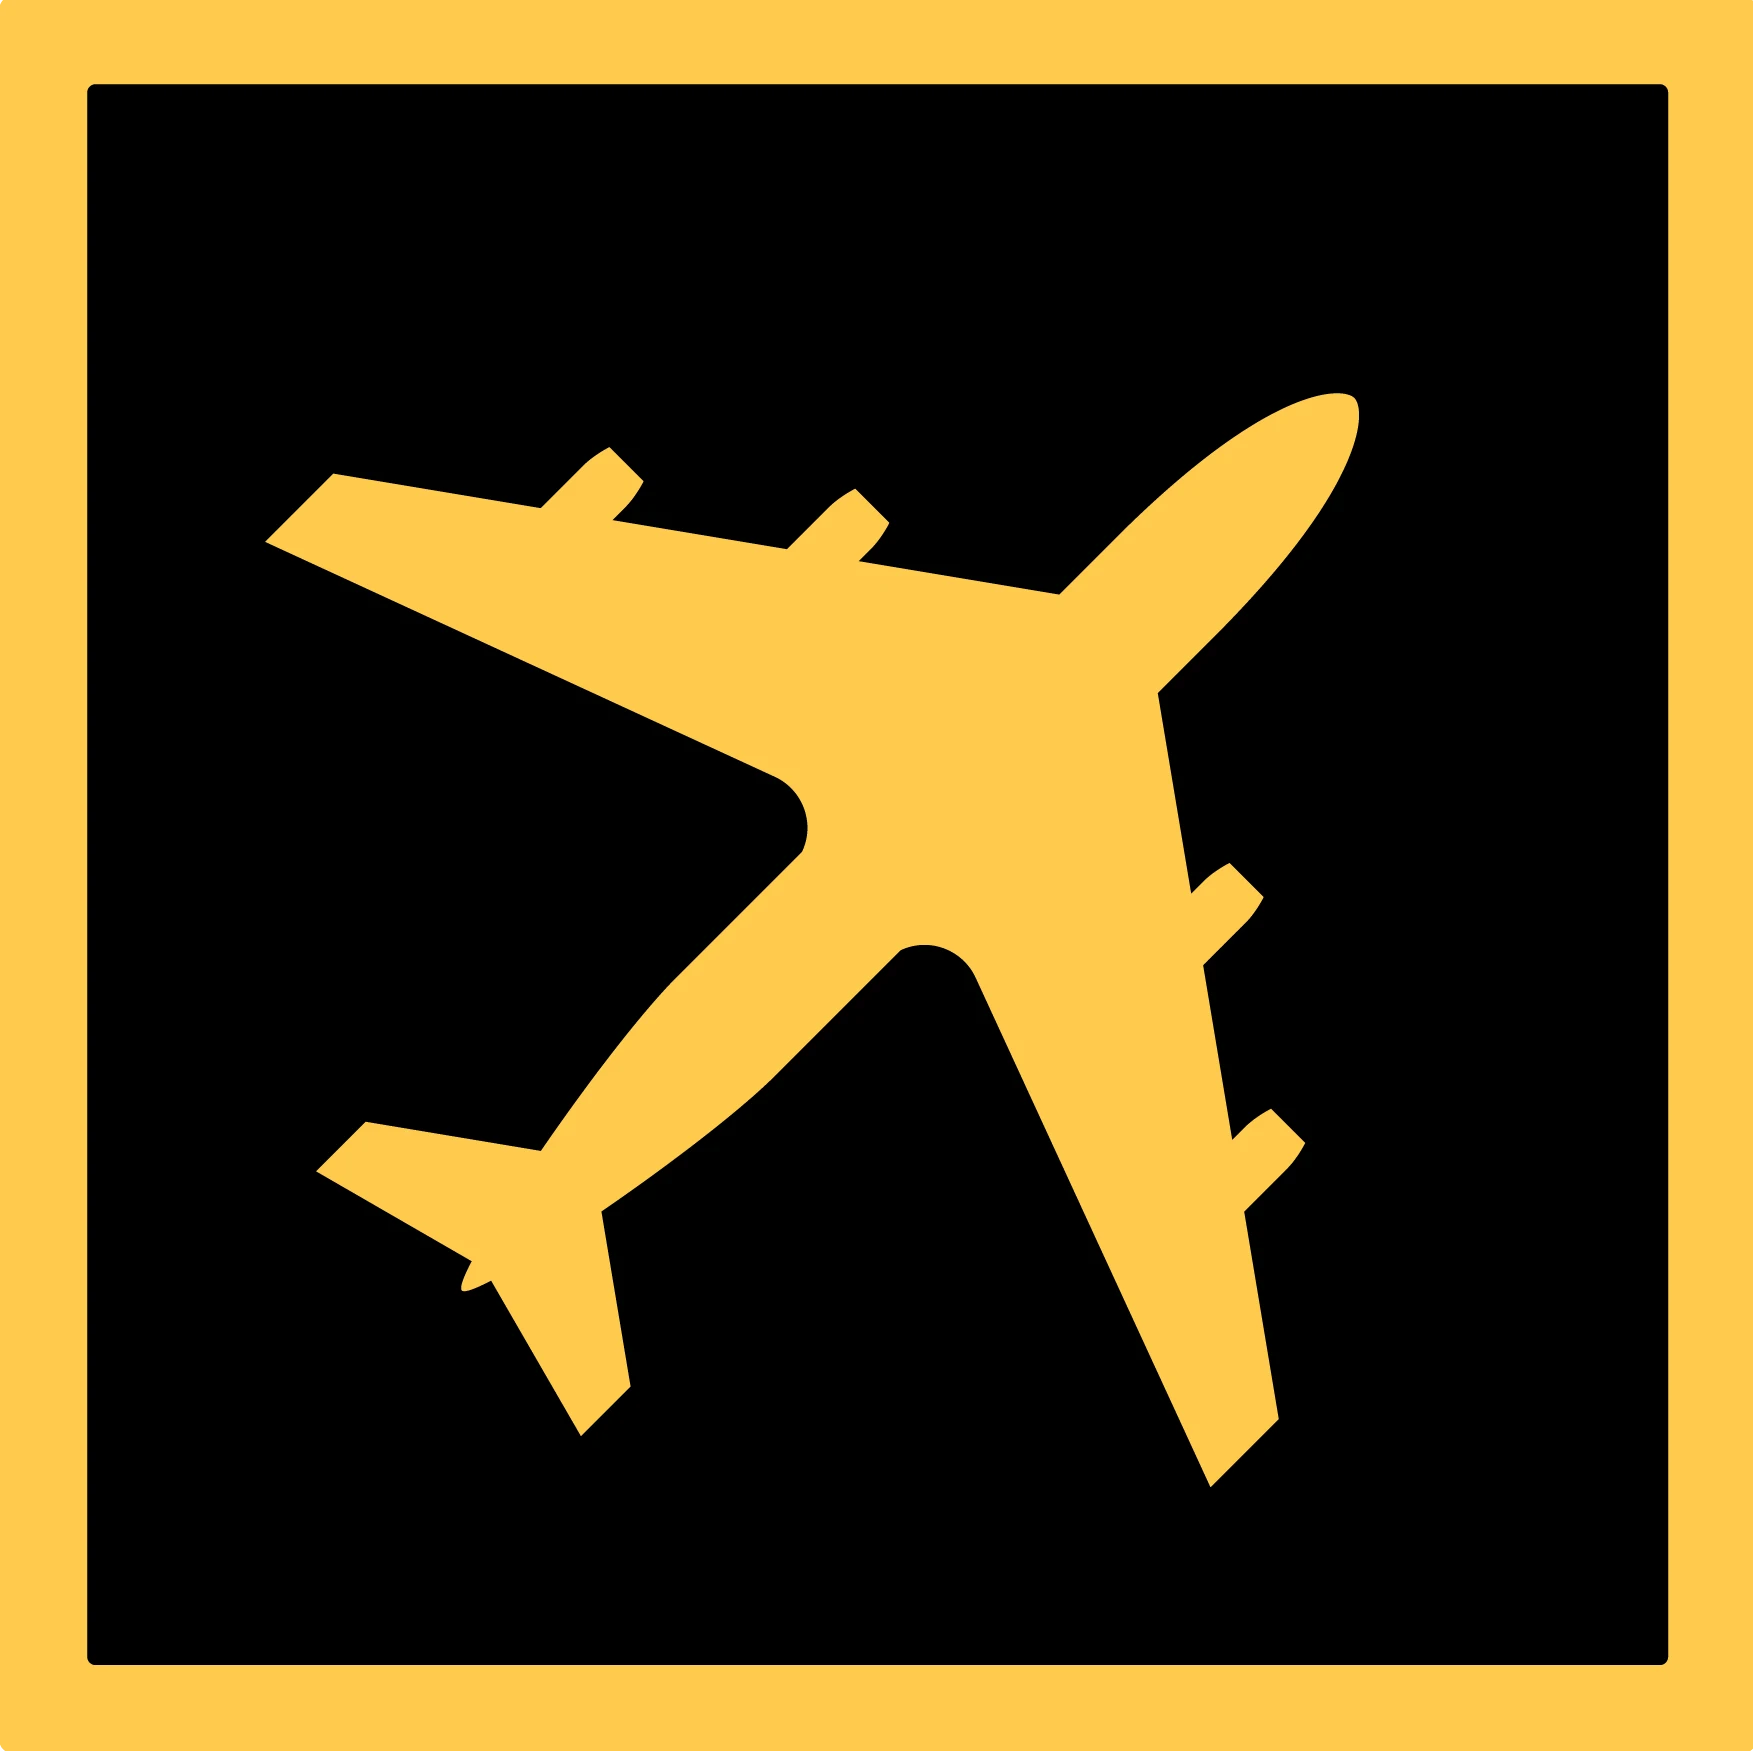 Departure Icon